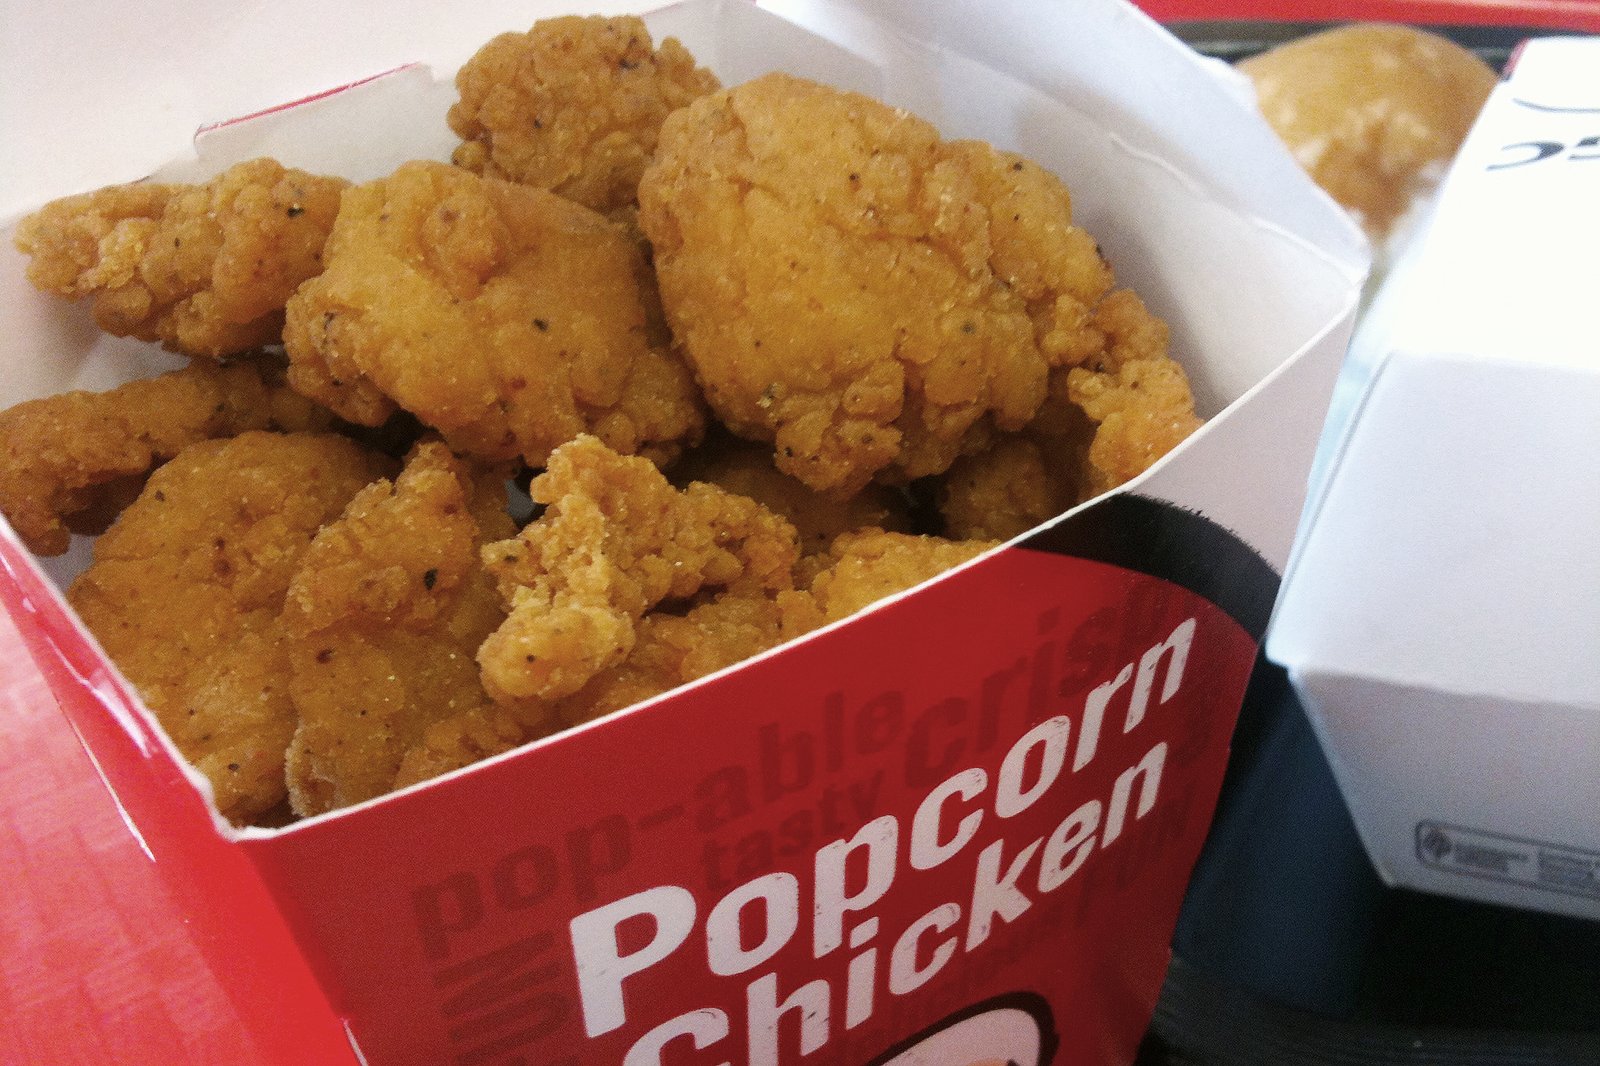 The popular fast food brand KFC is removing five menu items